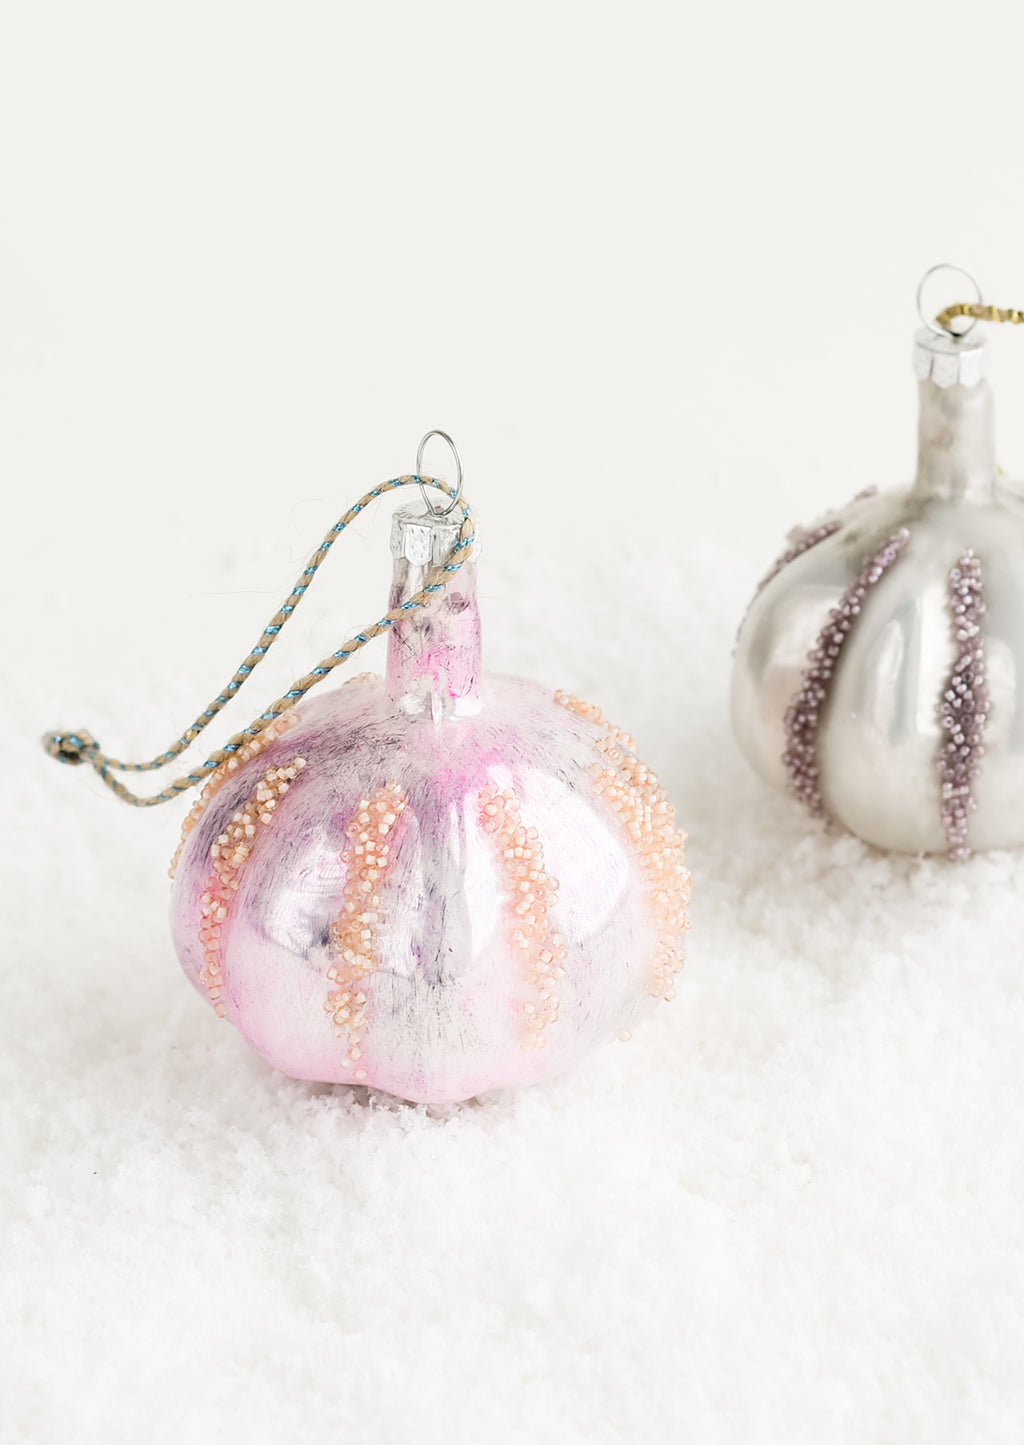 3: A decorative glass ornament in the shape of garlic bulb.